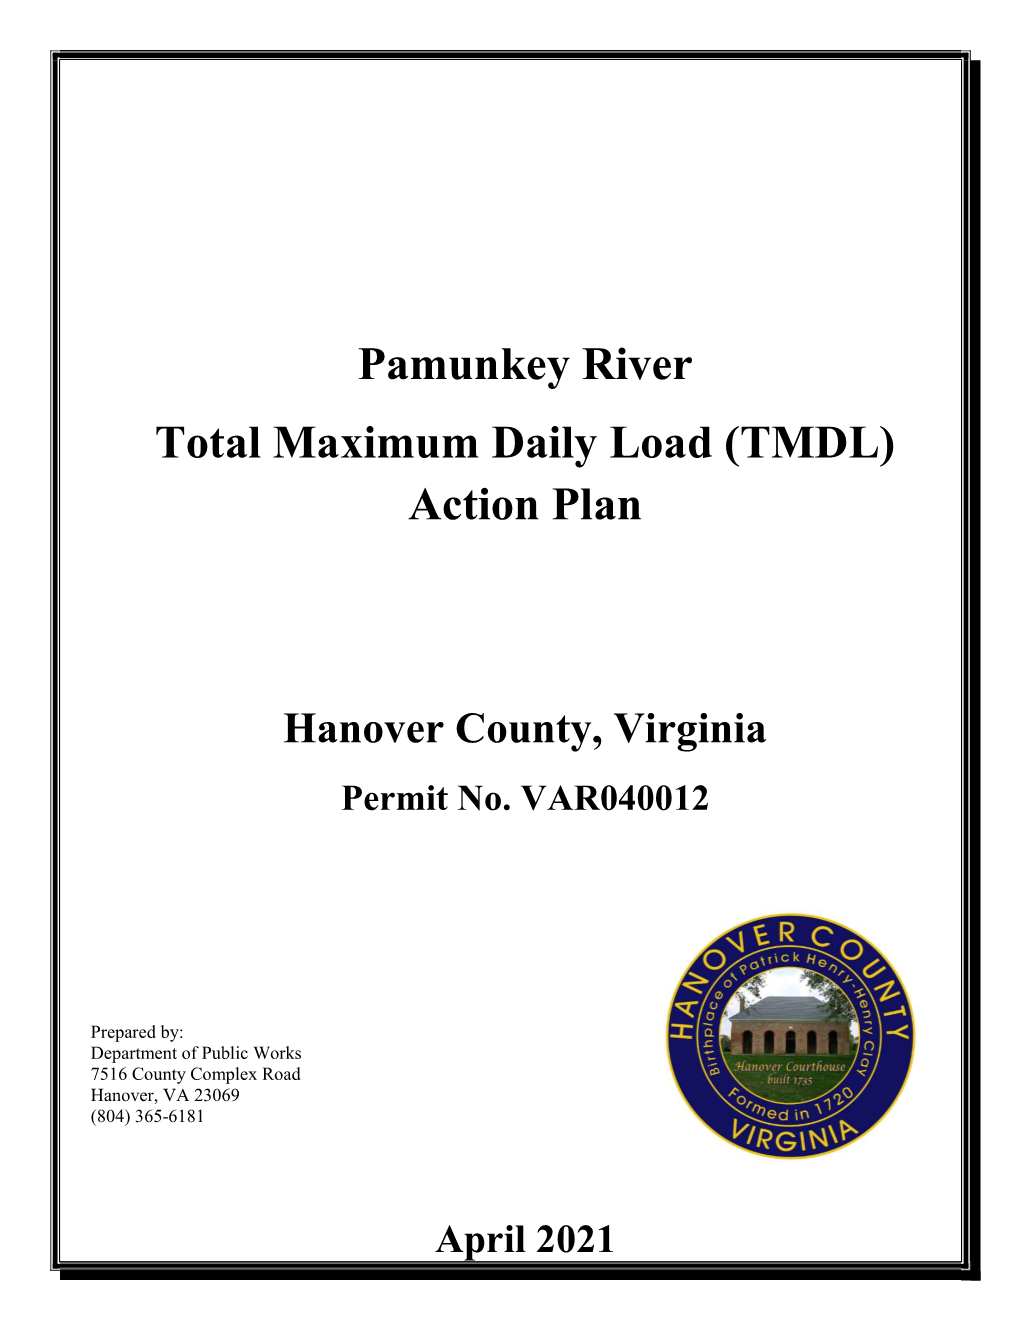 Pamunkey River Total Maximum Daily Load (TMDL) Action Plan